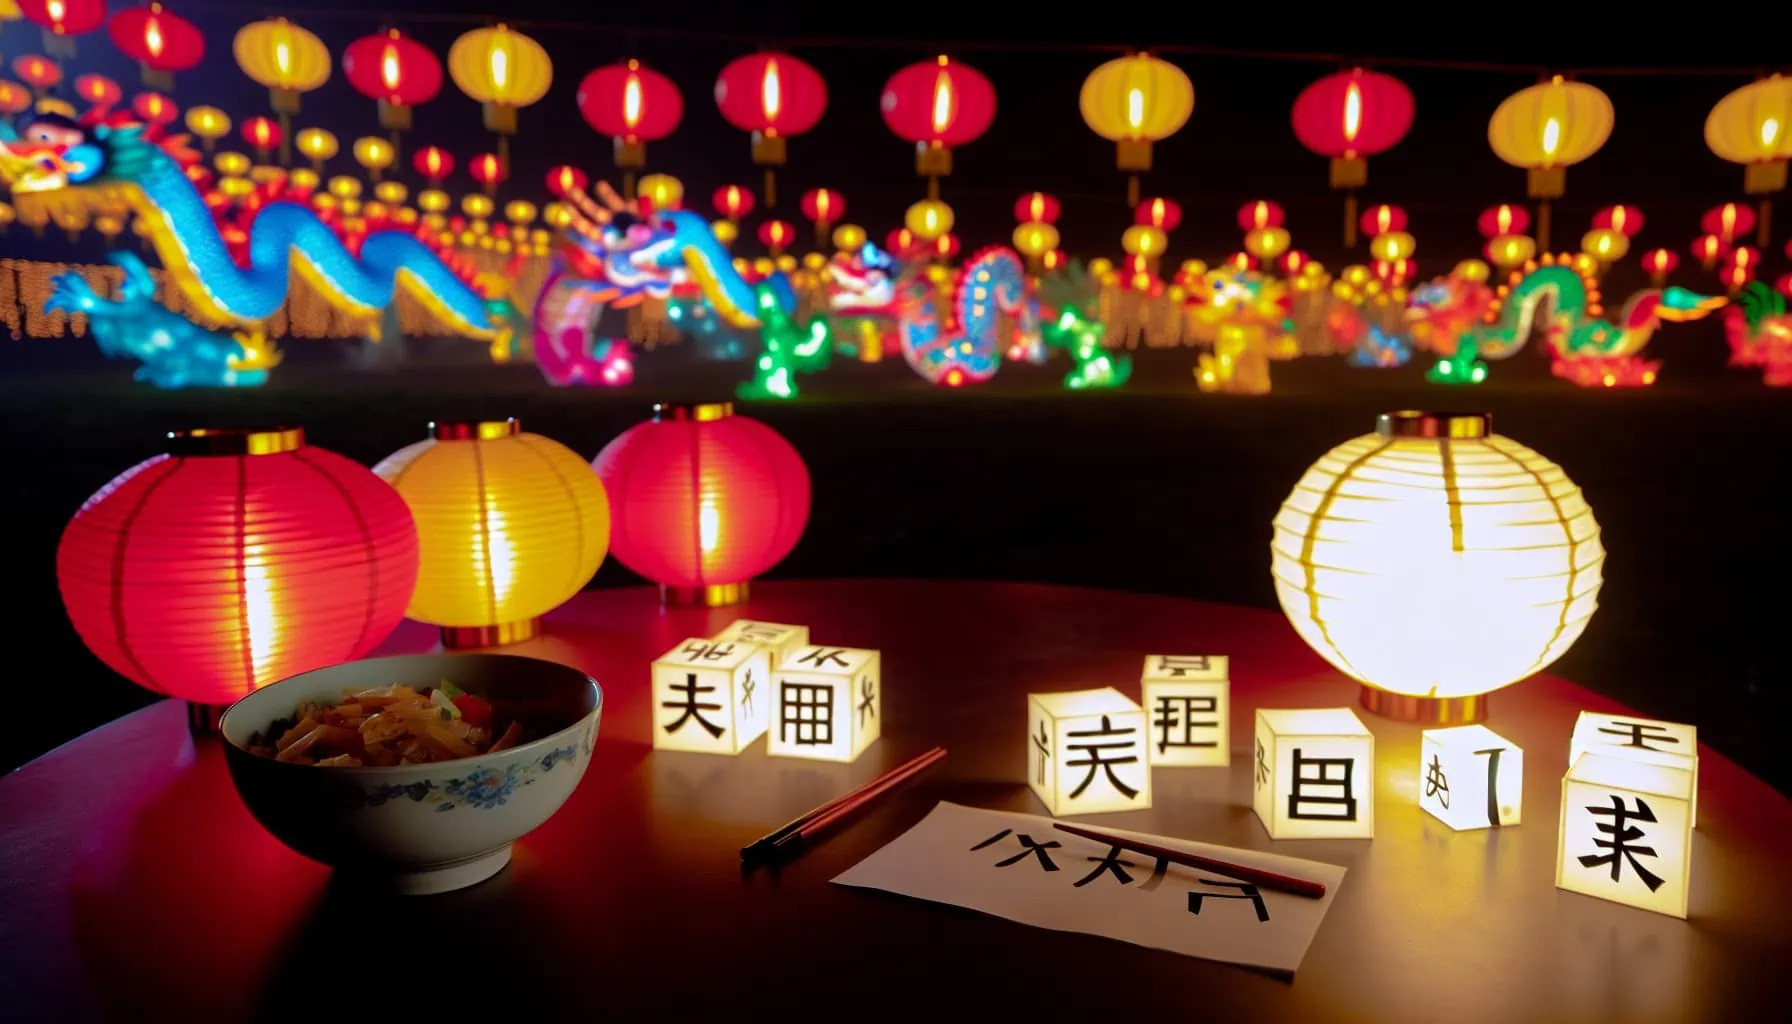 Lighting-Up-the-Sky-Lantern-Festival-in-China